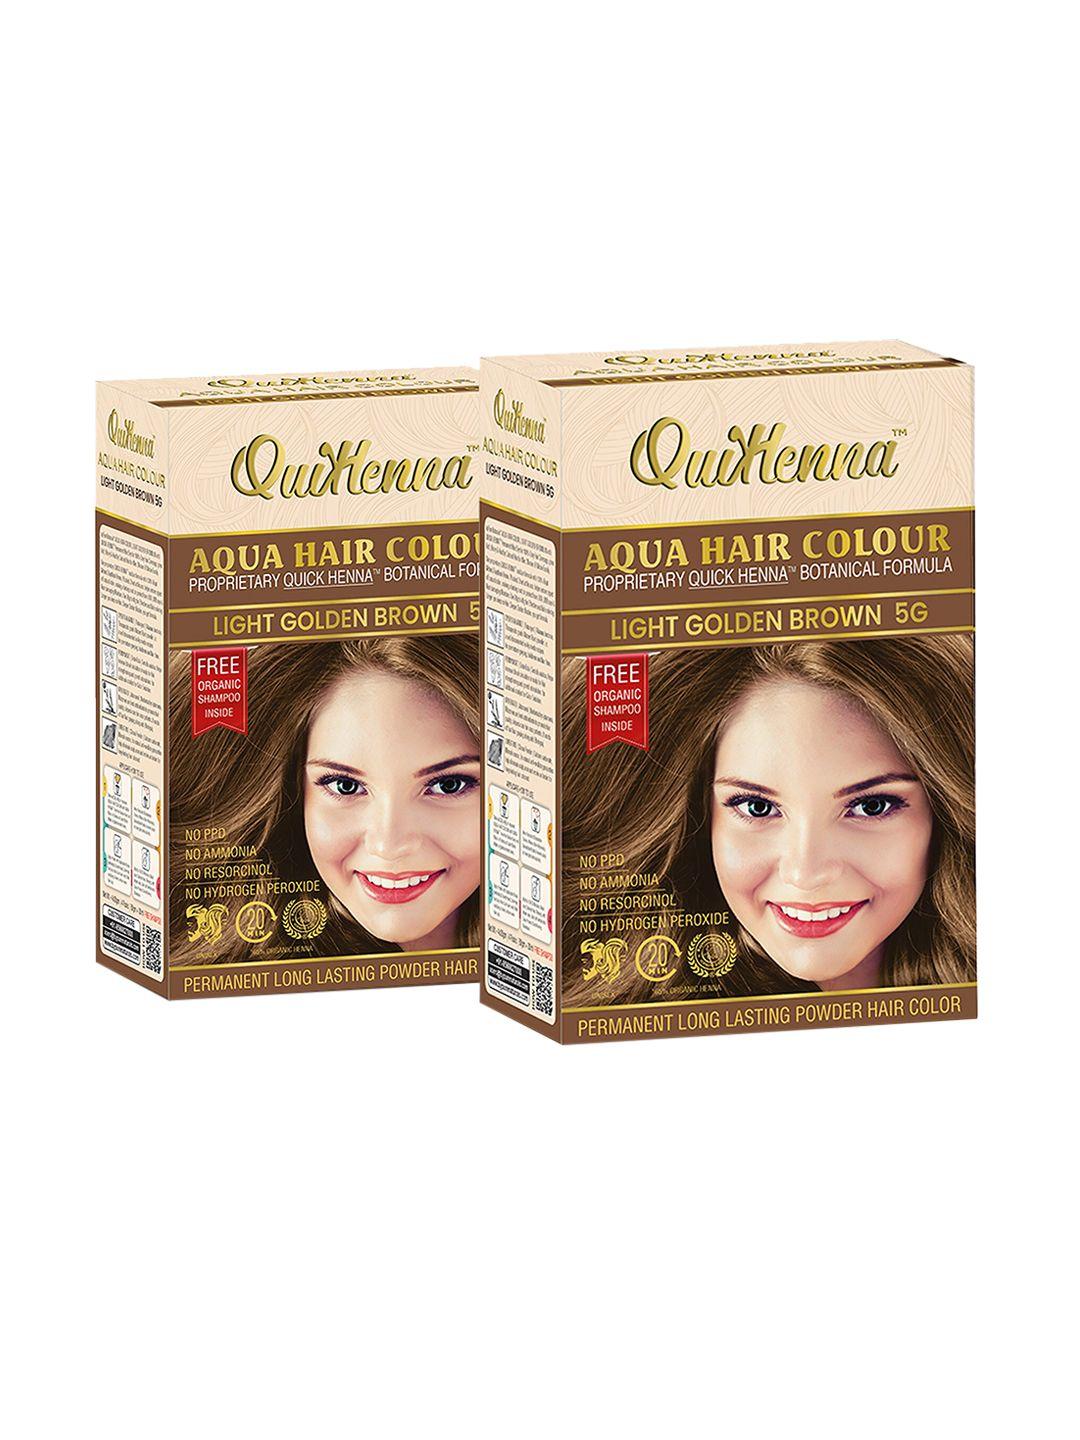 quikhenna set of 2 aqua long-lasting powder hair color 110g each - light golden brown 5g